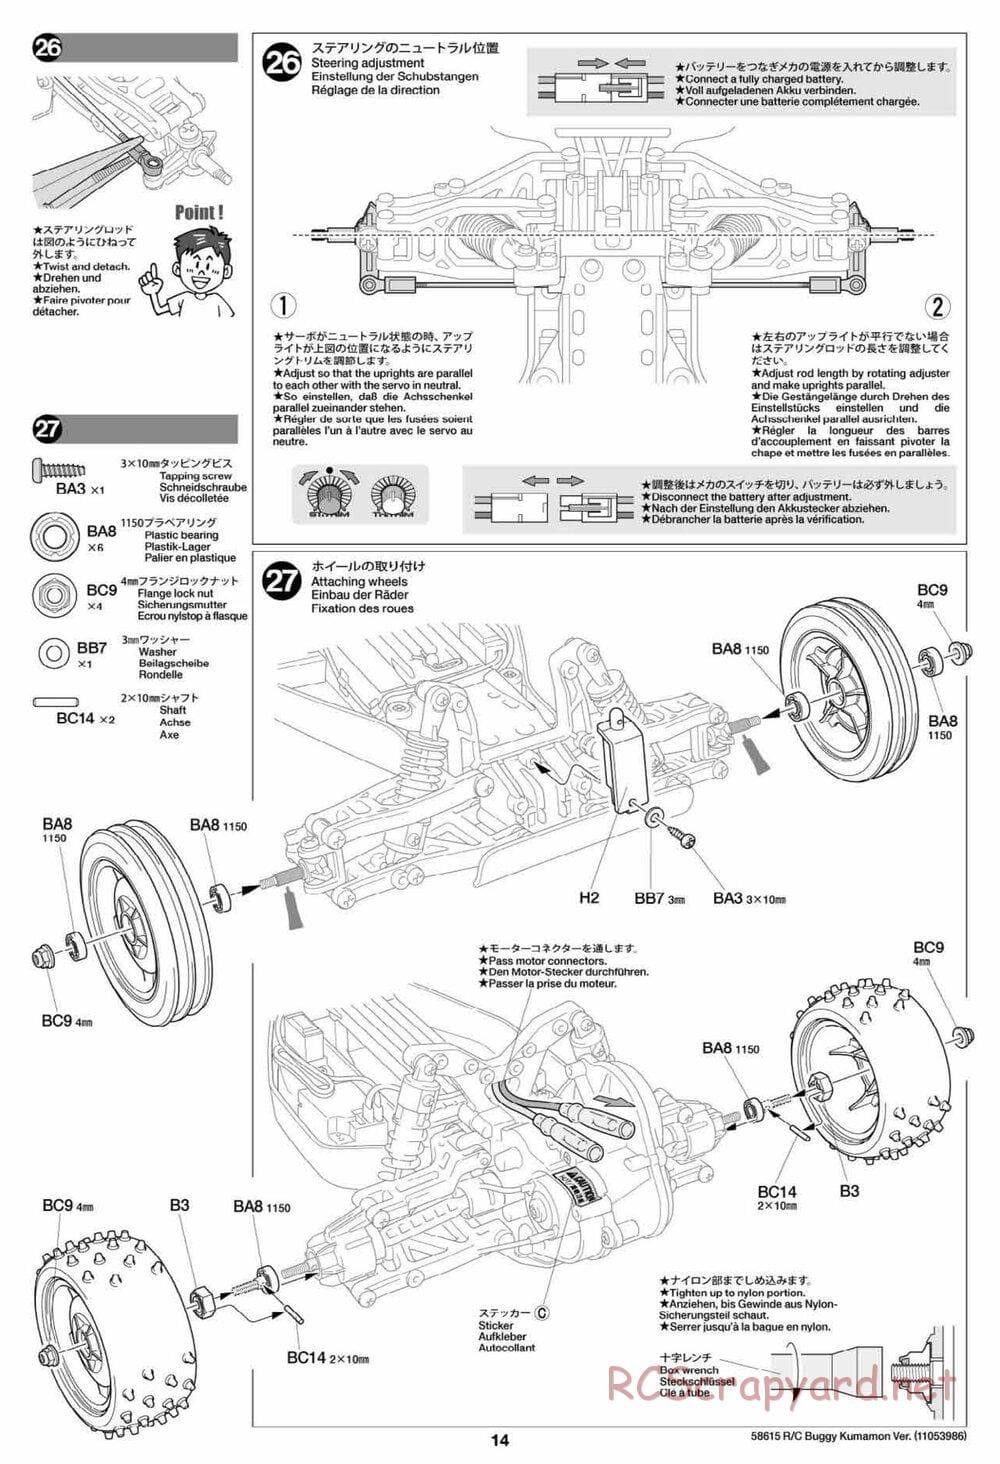 Tamiya - Buggy Kumamon Version Chassis - Manual - Page 14